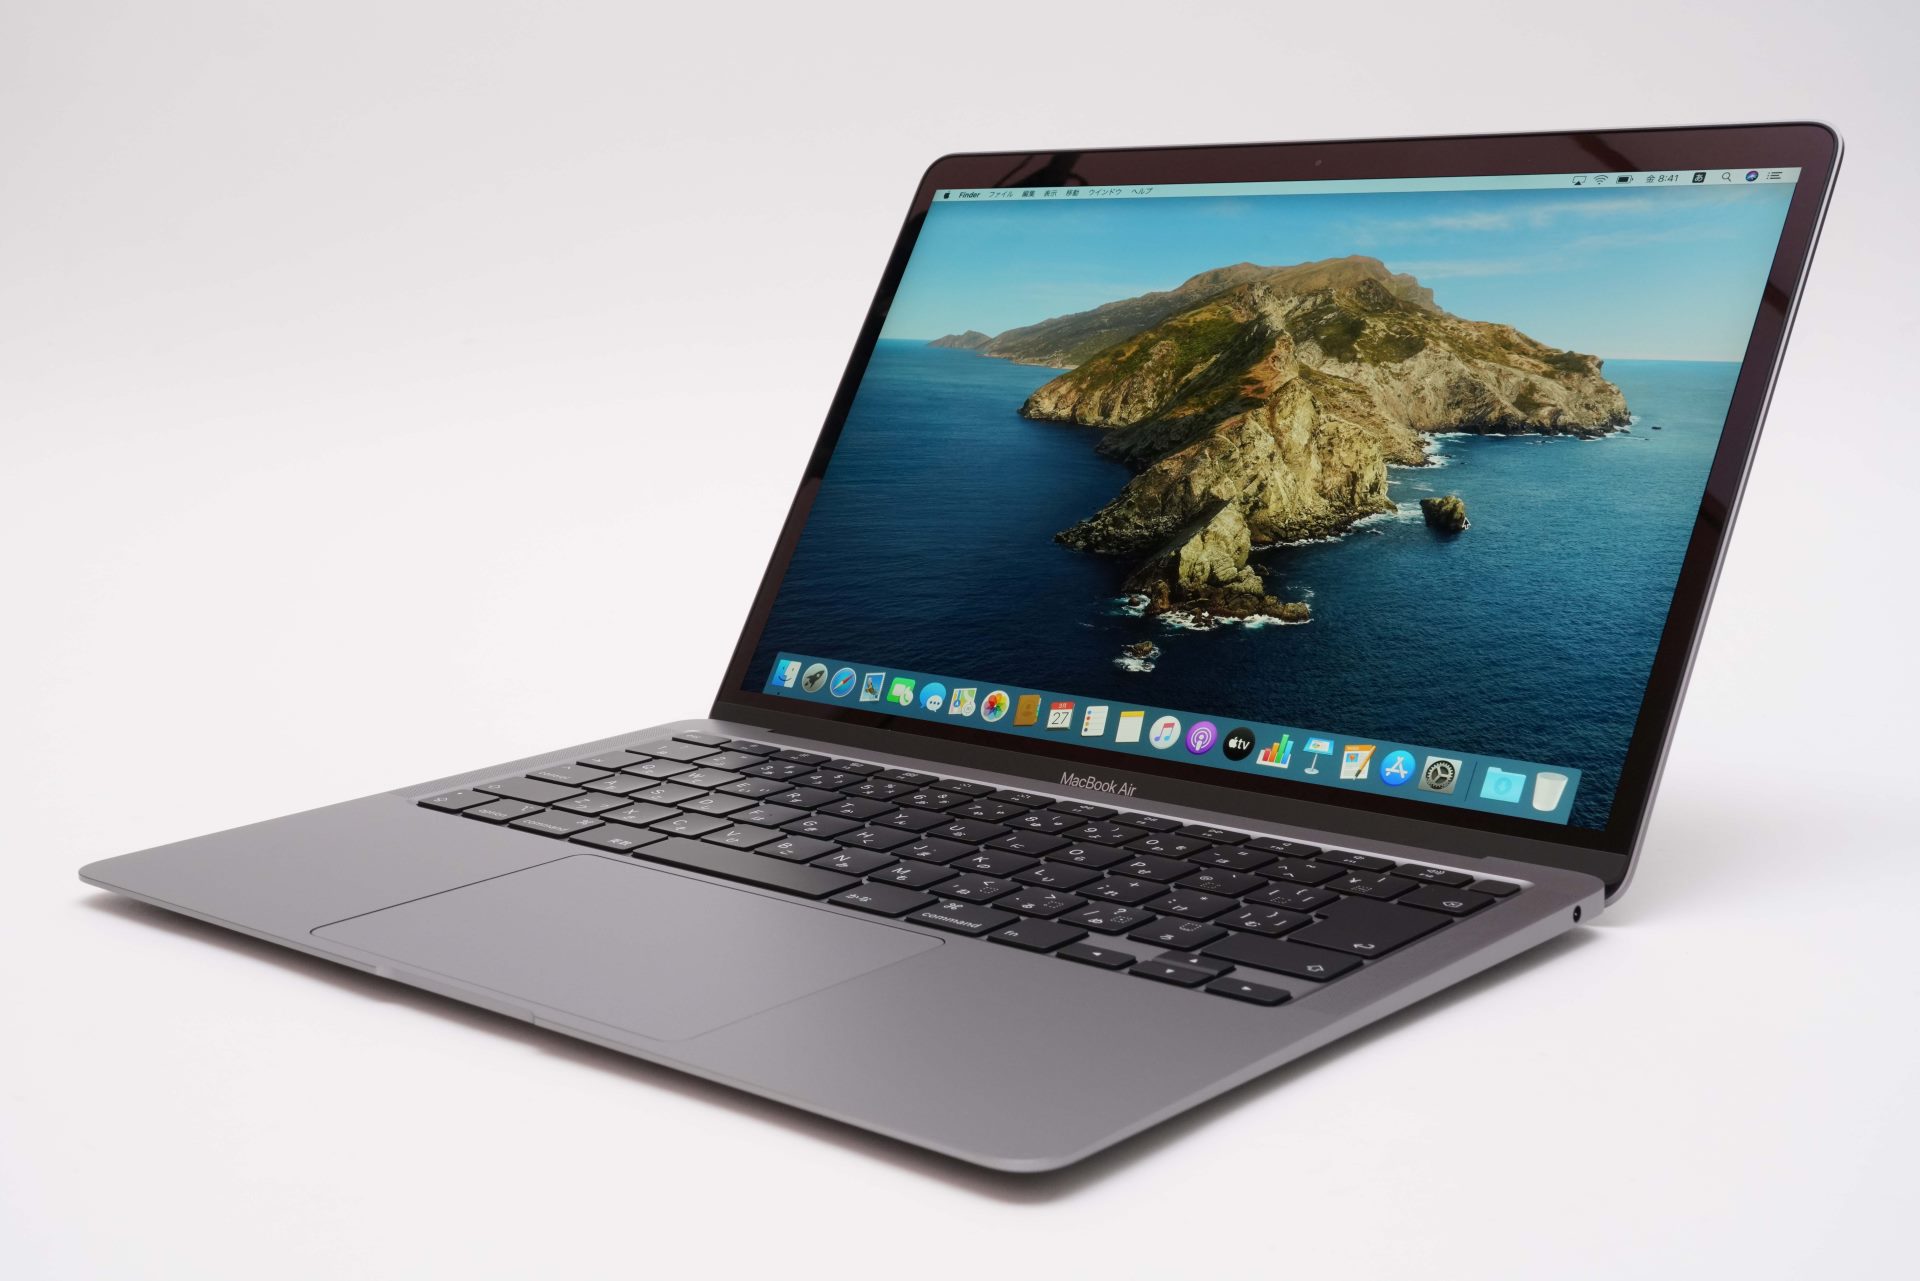 Hothotレビュー】4コアに倍増した「MacBook Air 2020」をmacOSとWindowsで性能検証してみた - PC Watch